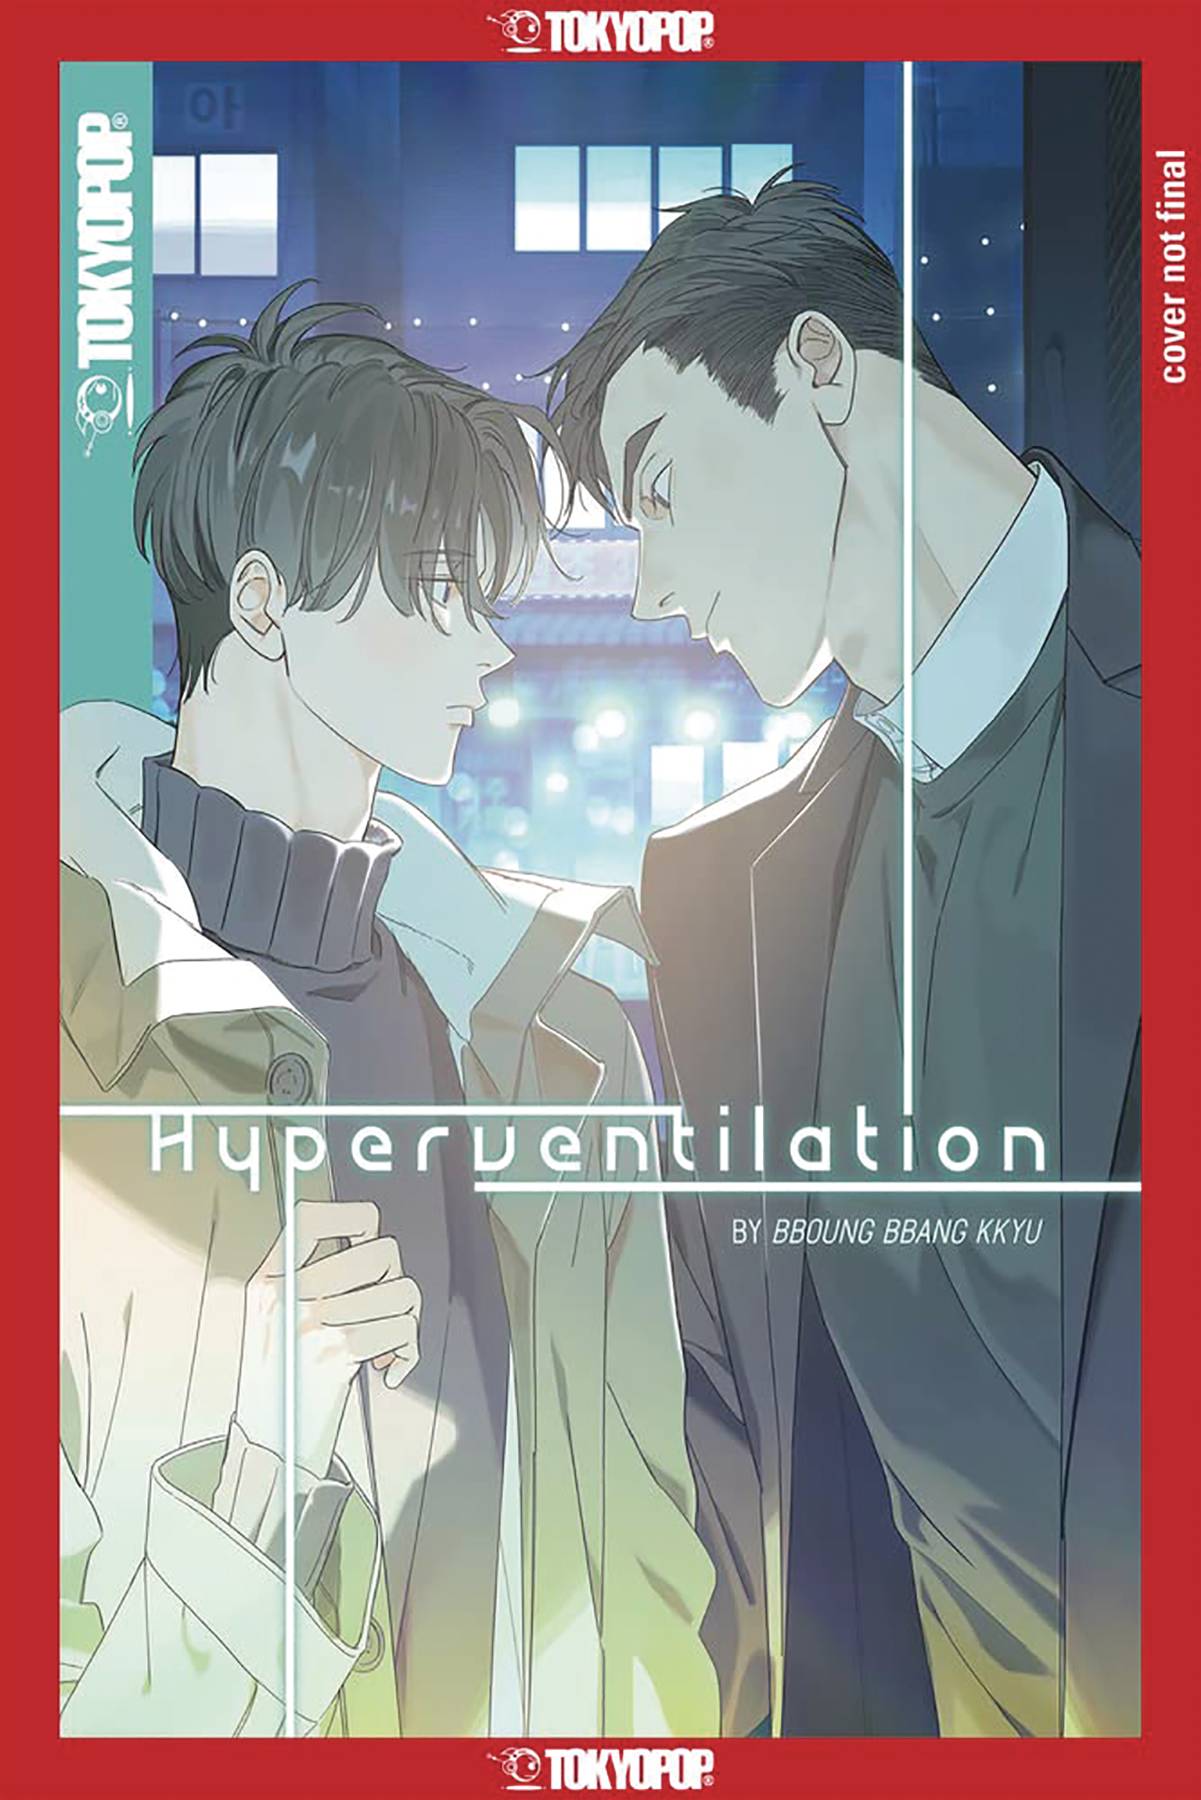 The One Stop Shop Comics & Games Hyperventilation Gn Vol 00 (Mr) (C: 0-1-1) (10/12/2022) TOKYOPOP